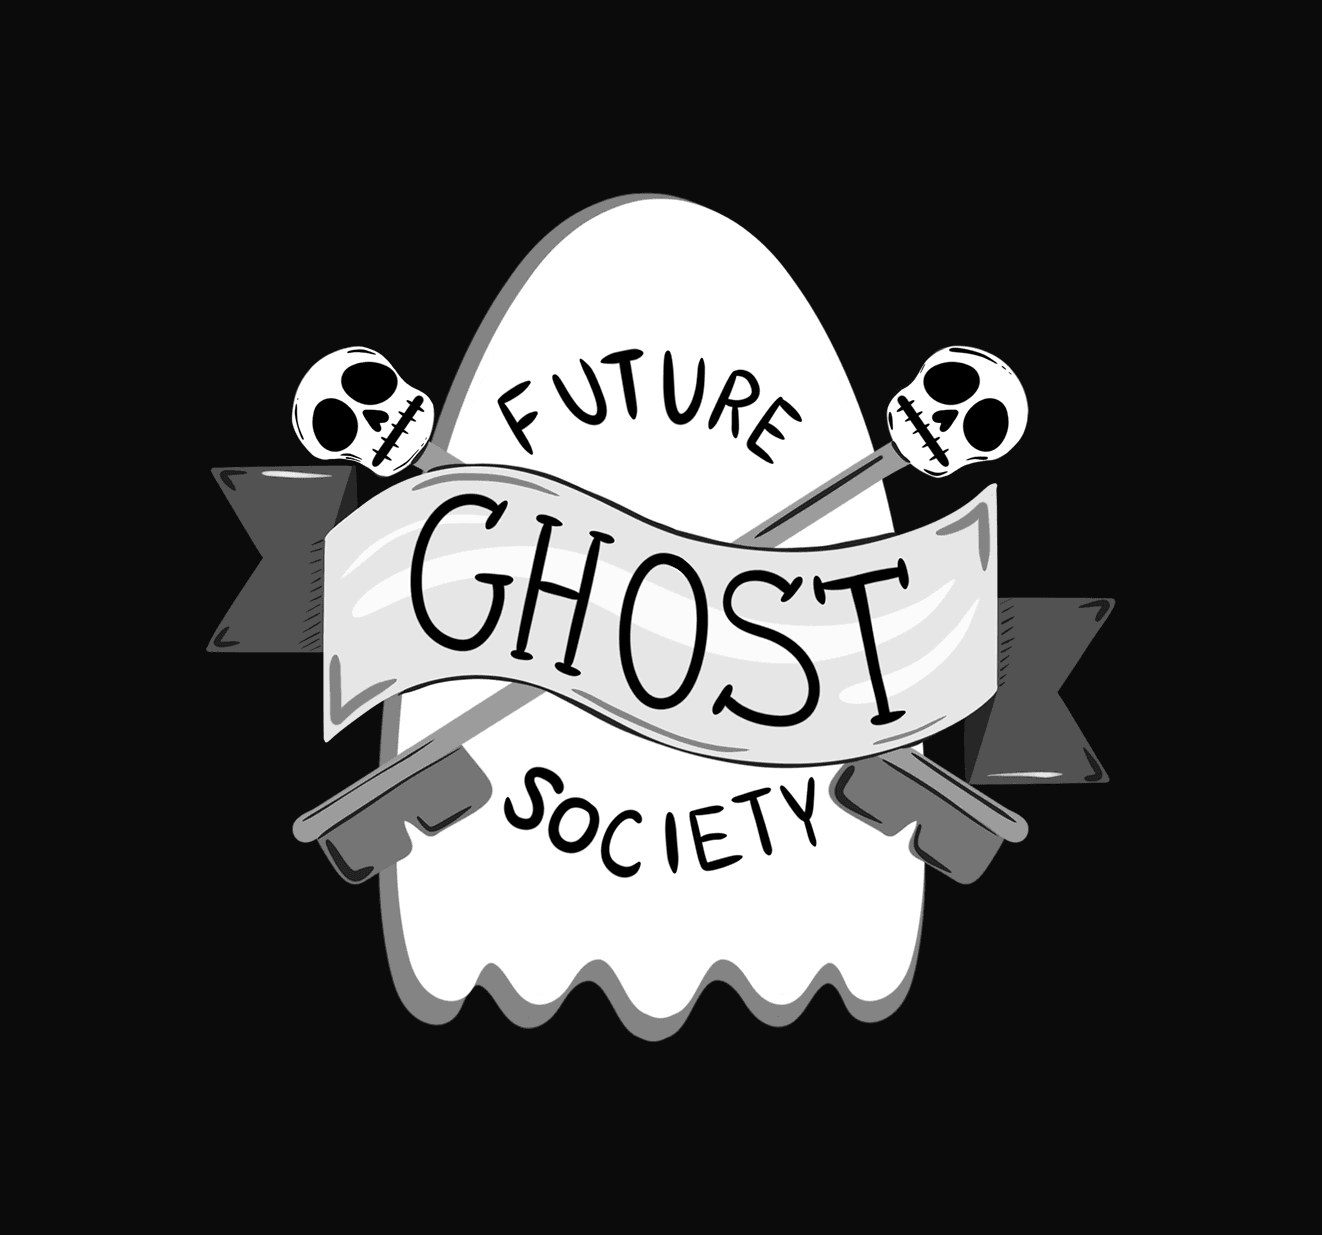 FutureGhostSociety